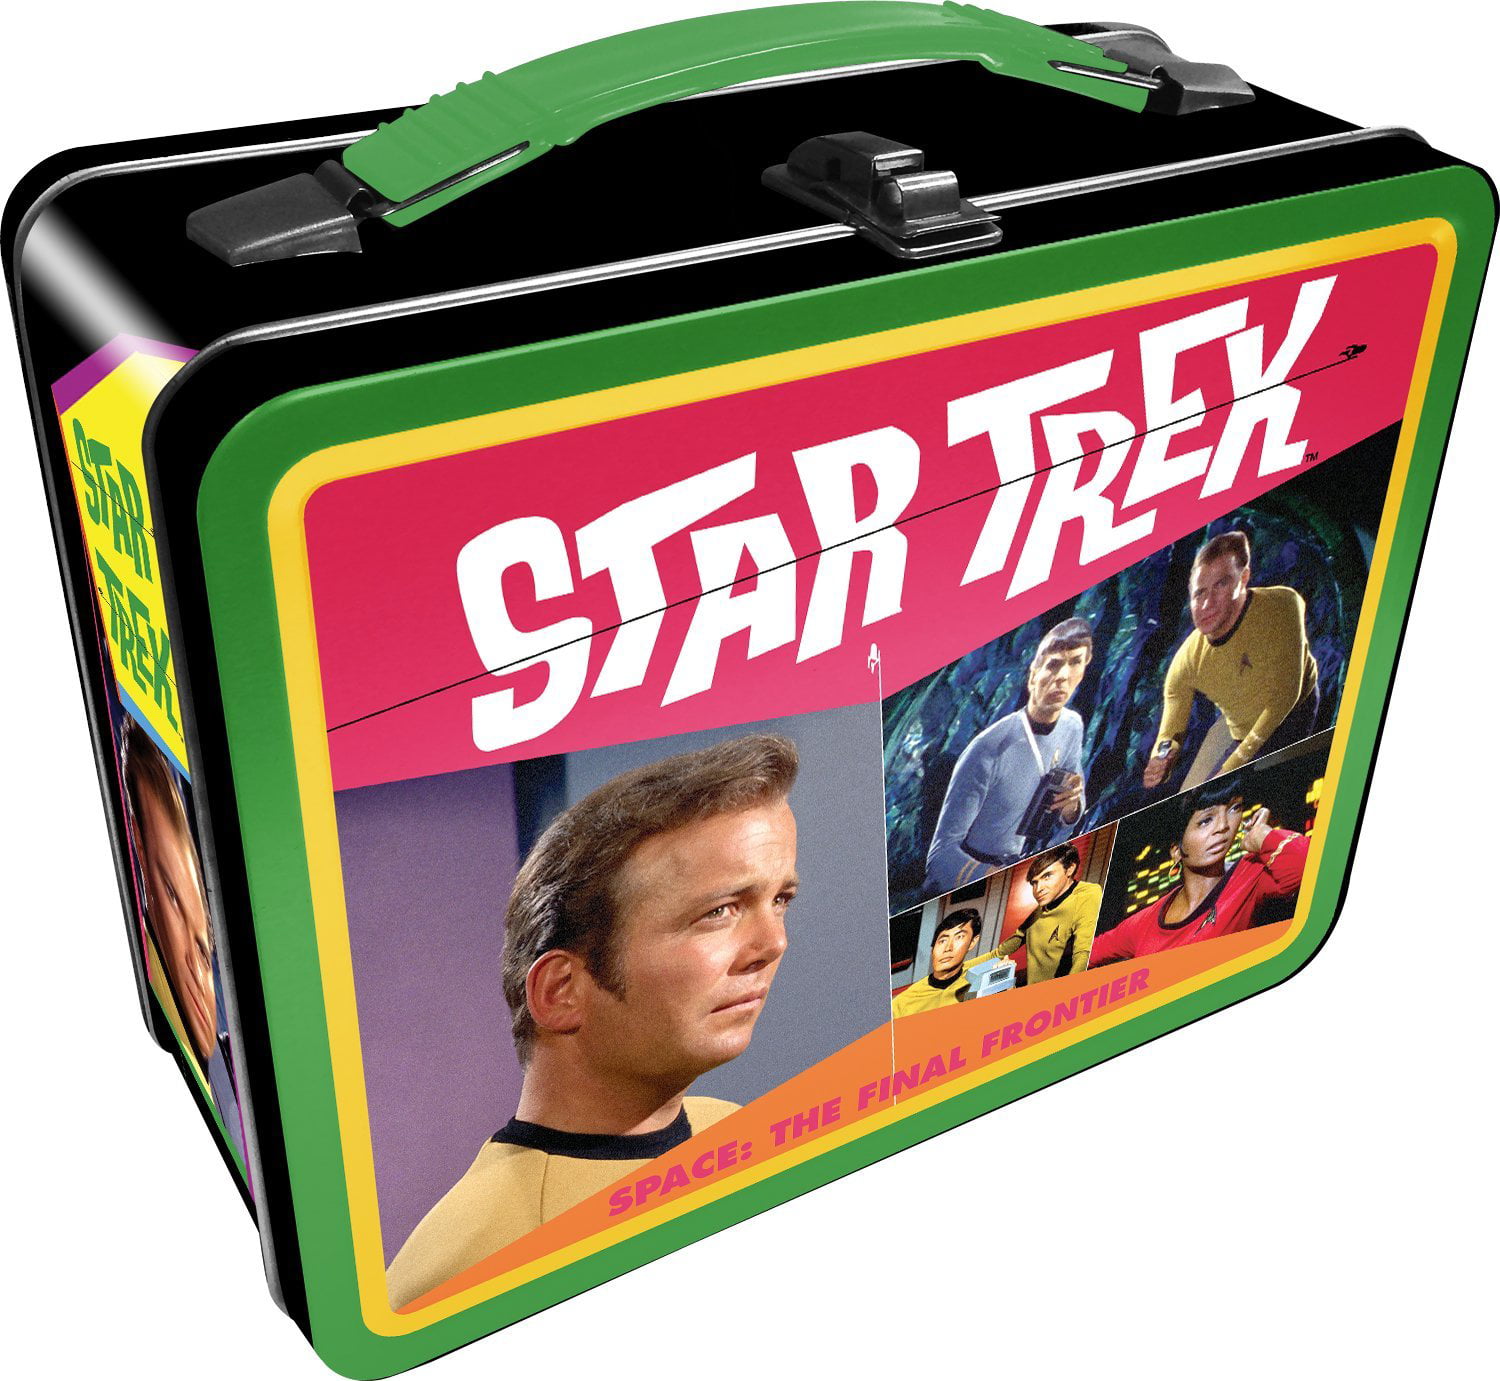 SPOCK Teeny Tins Mini Lunch Box Nerd Block exclusive NEW SEALED Star Trek KIRK 